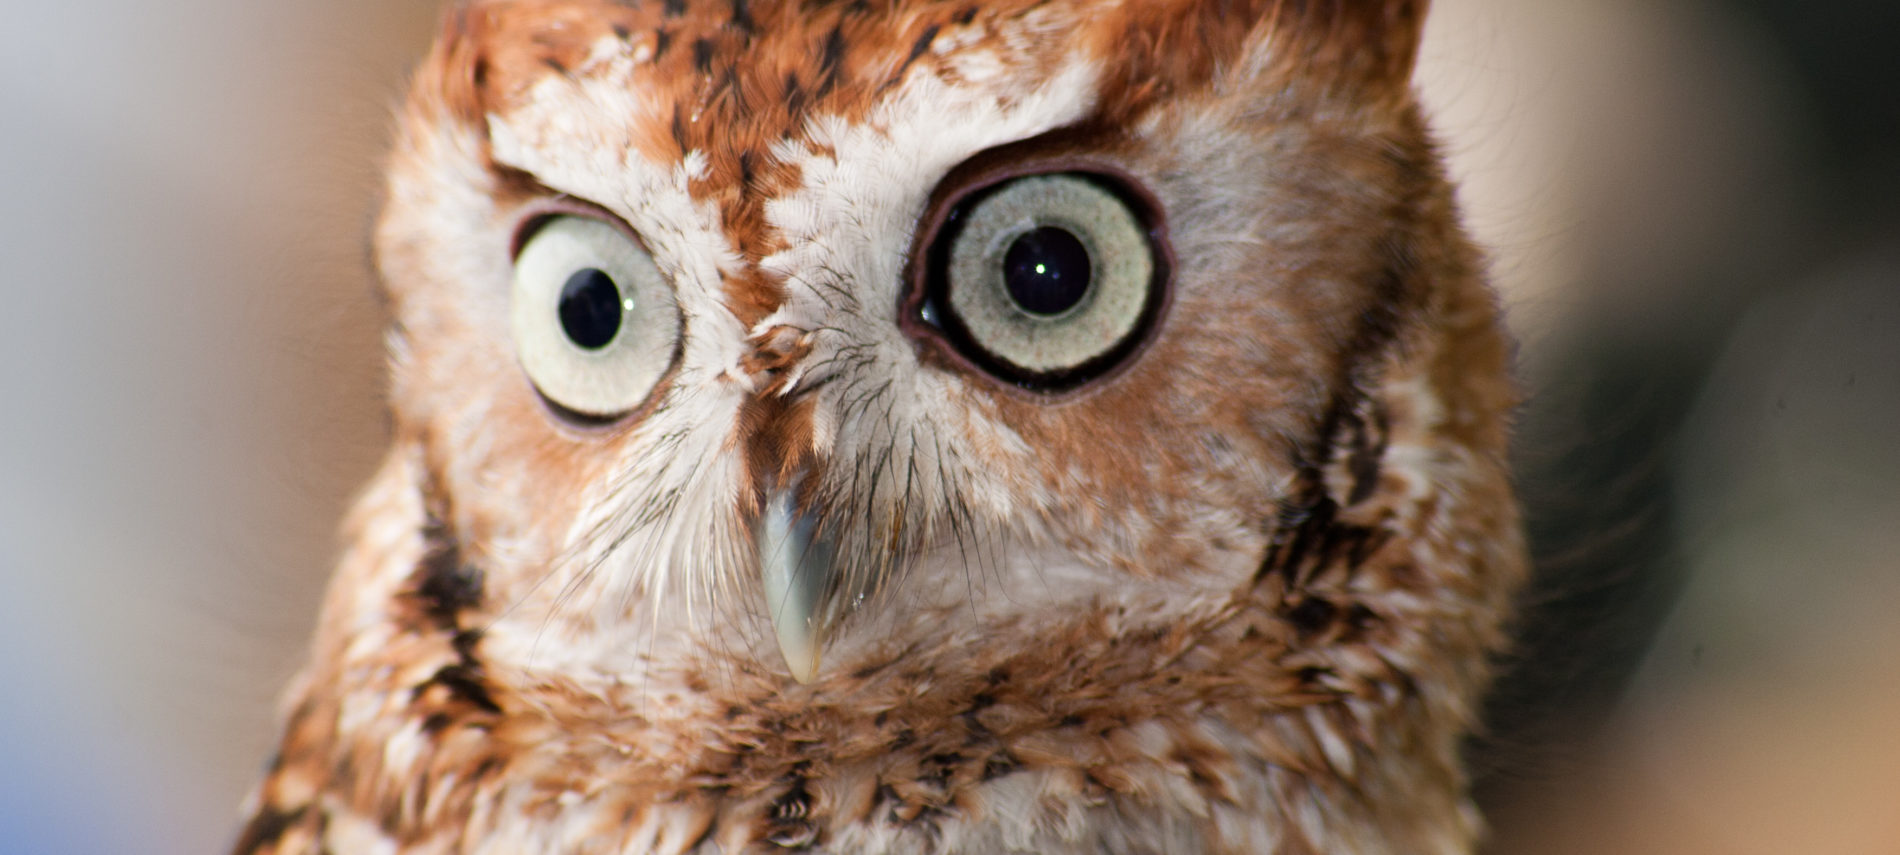 Eastern Screech Owl by Albert Herring https://commons.wikimedia.org/wiki/File:WR_-_Eastern_Screech_Owl_4_(5761936594).jpg